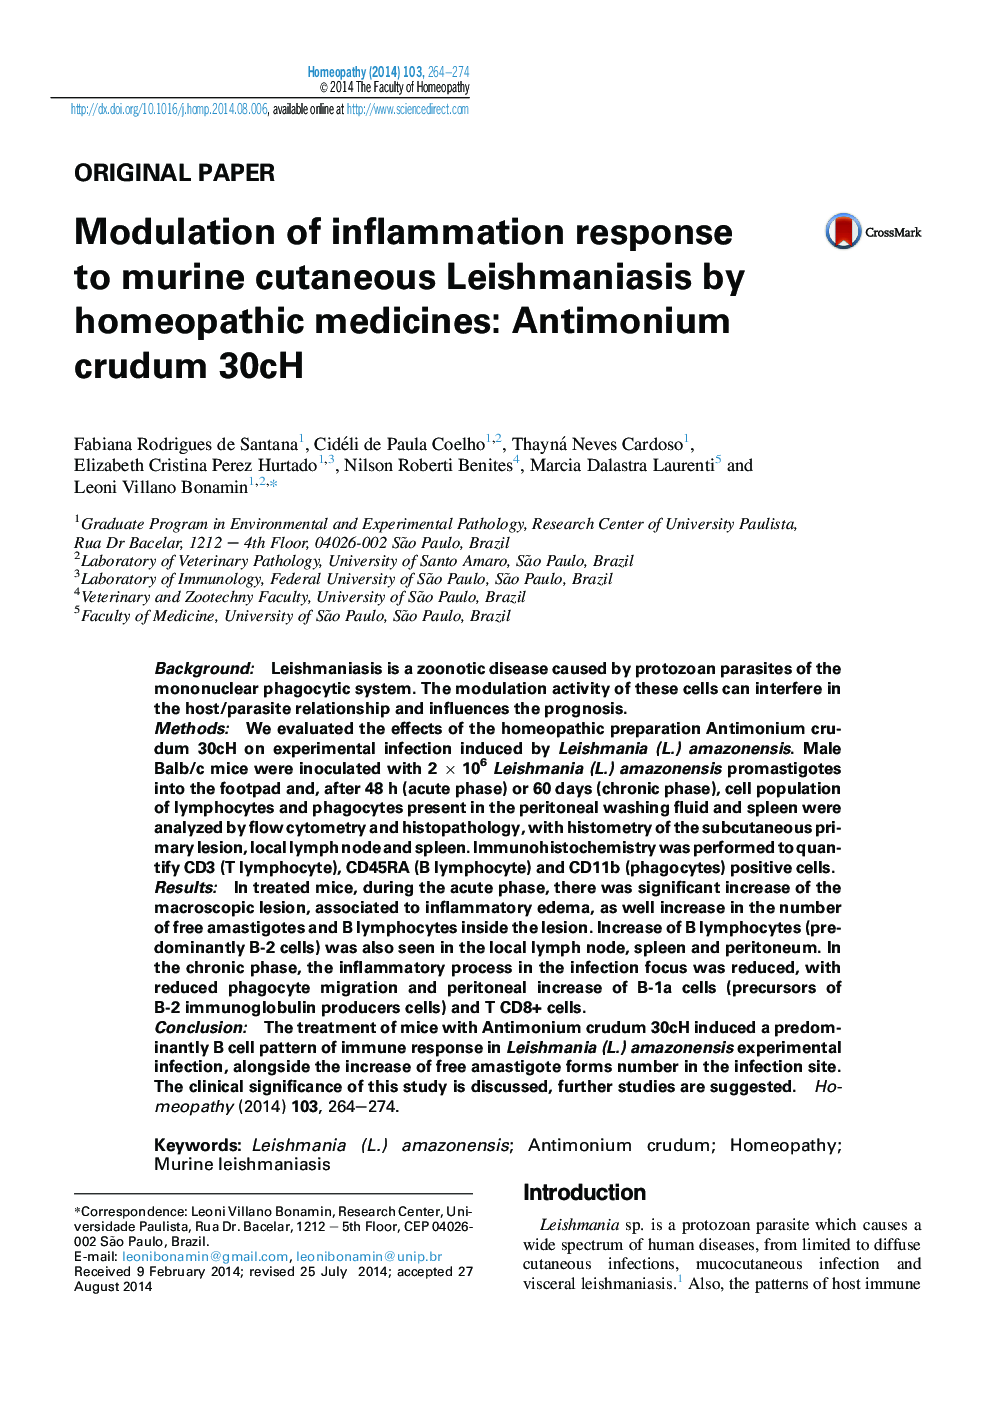 Modulation of inflammation response to murine cutaneous Leishmaniasis by homeopathic medicines: Antimonium crudum 30cH